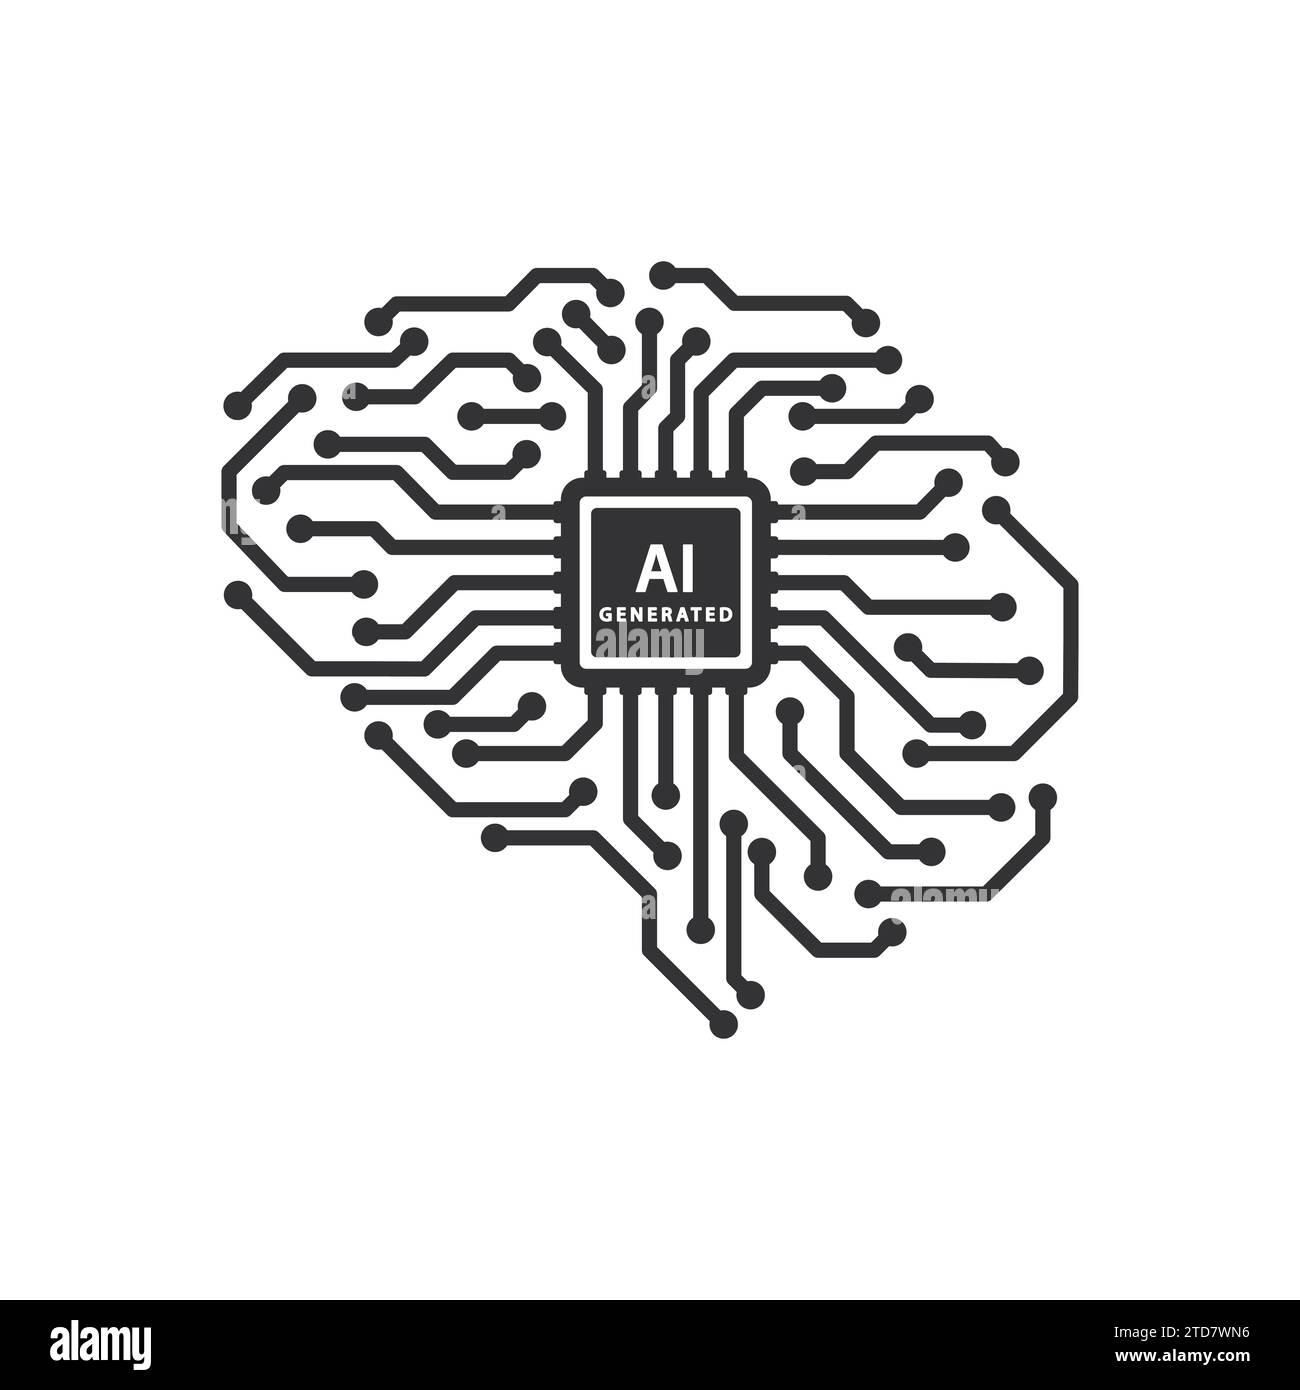 Brain circuit board logo, artificial intelligence technology chip design concept Stock Vector